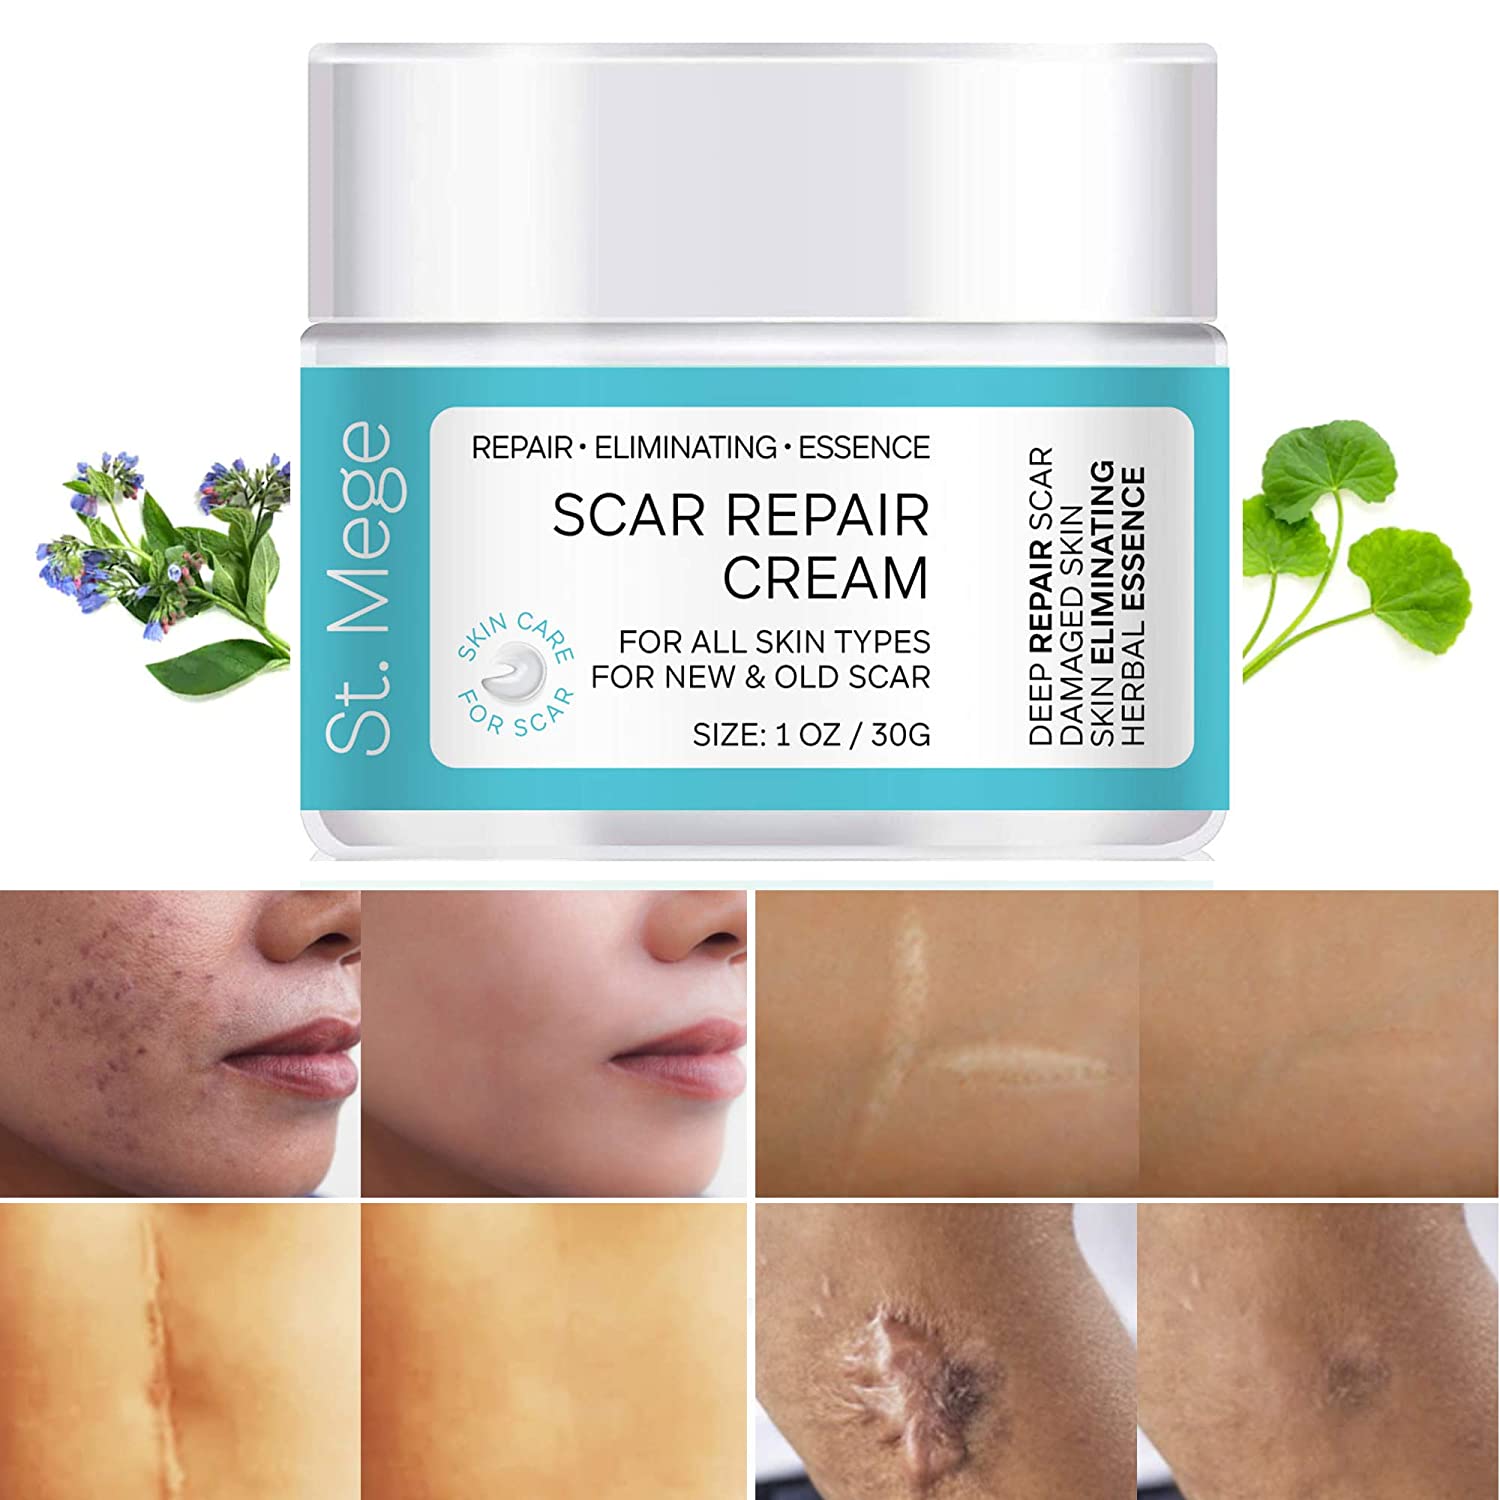 Scar Cream - Homecare24